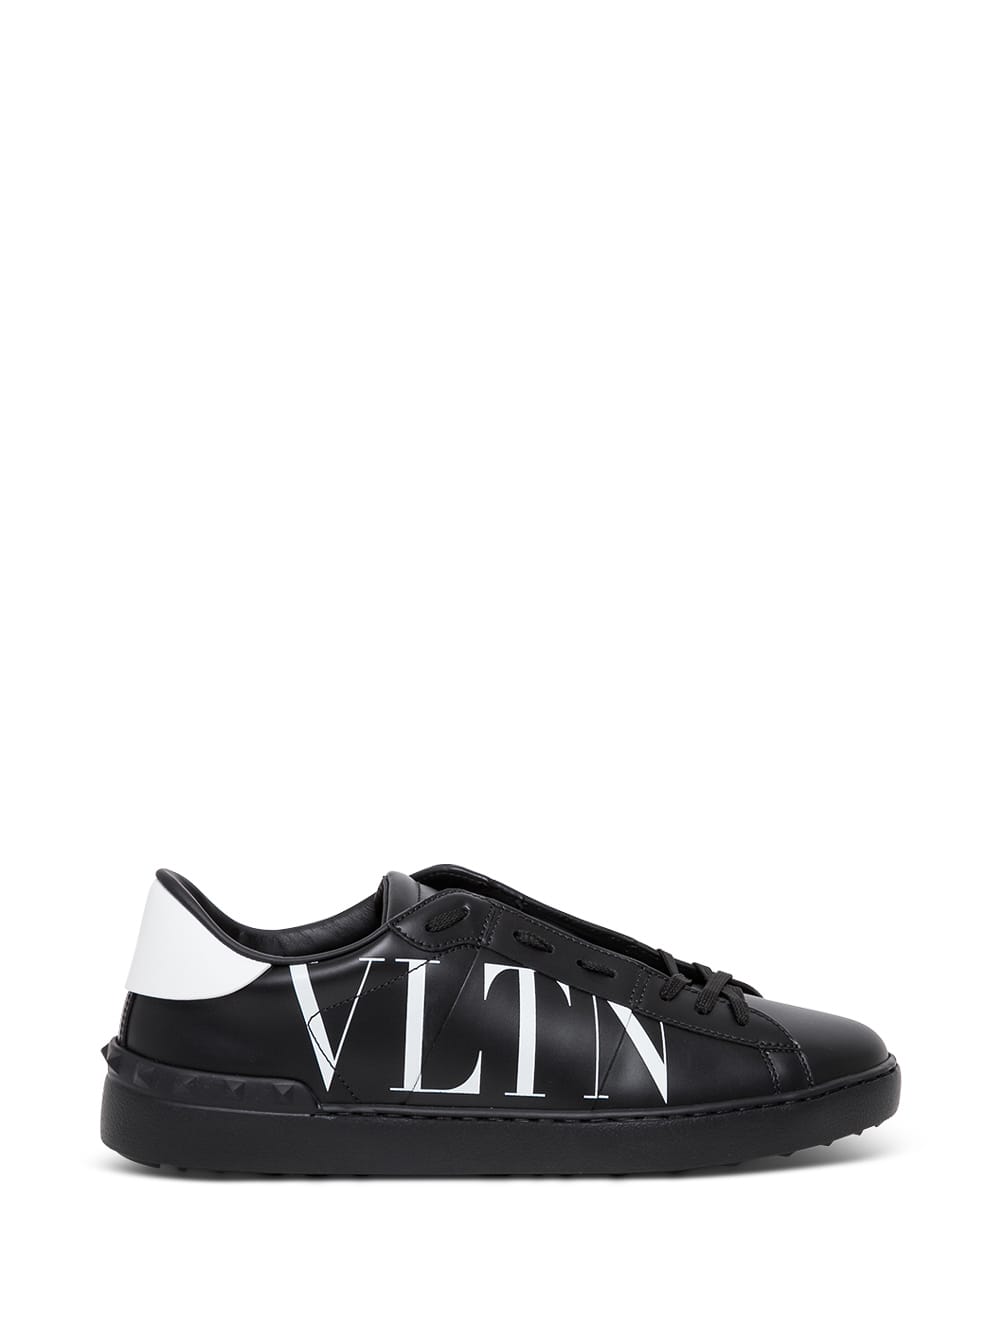 Valentino Garavani Open Leather Sneakers With Vltn Print